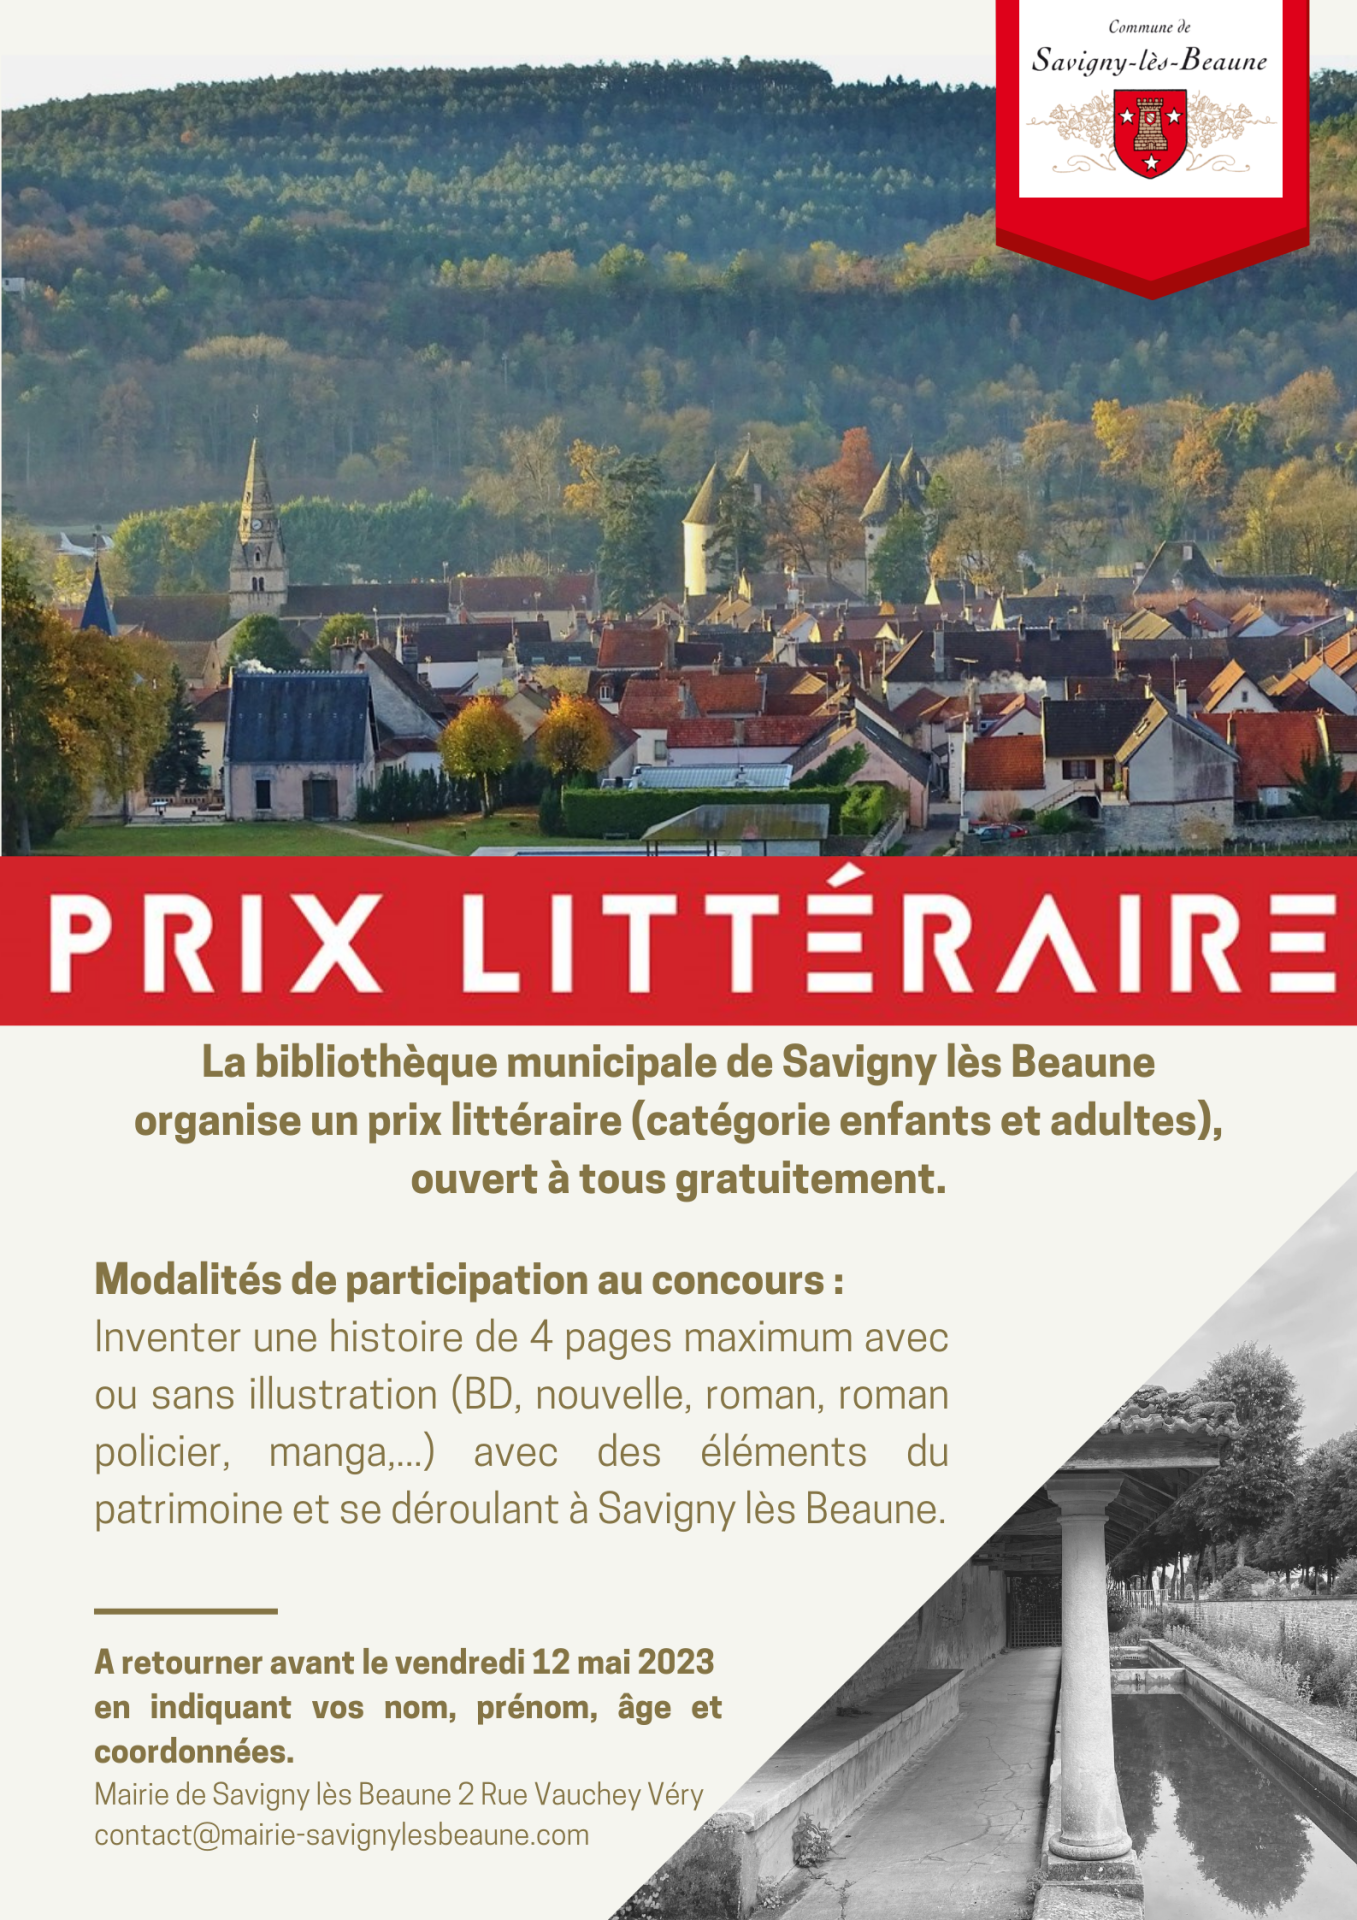 Bibliothèque : prix littéraire à Savigny lès Beaune